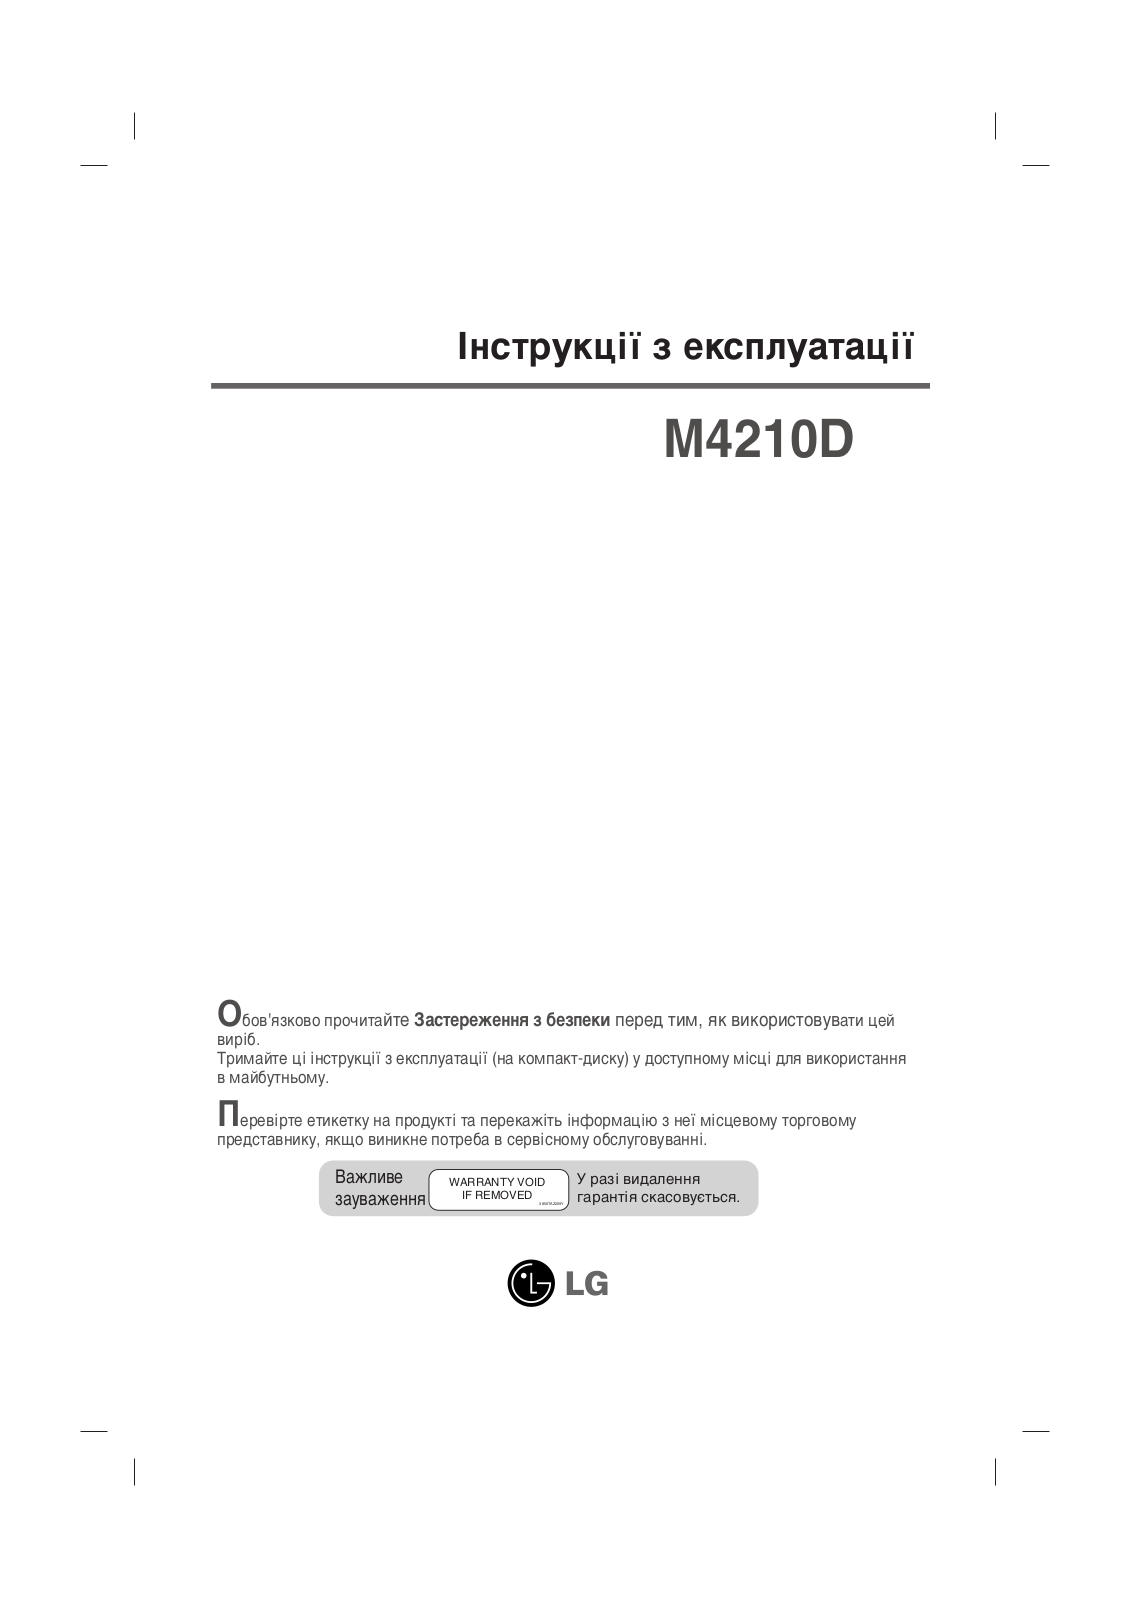 LG M4210D-B21 User Manual